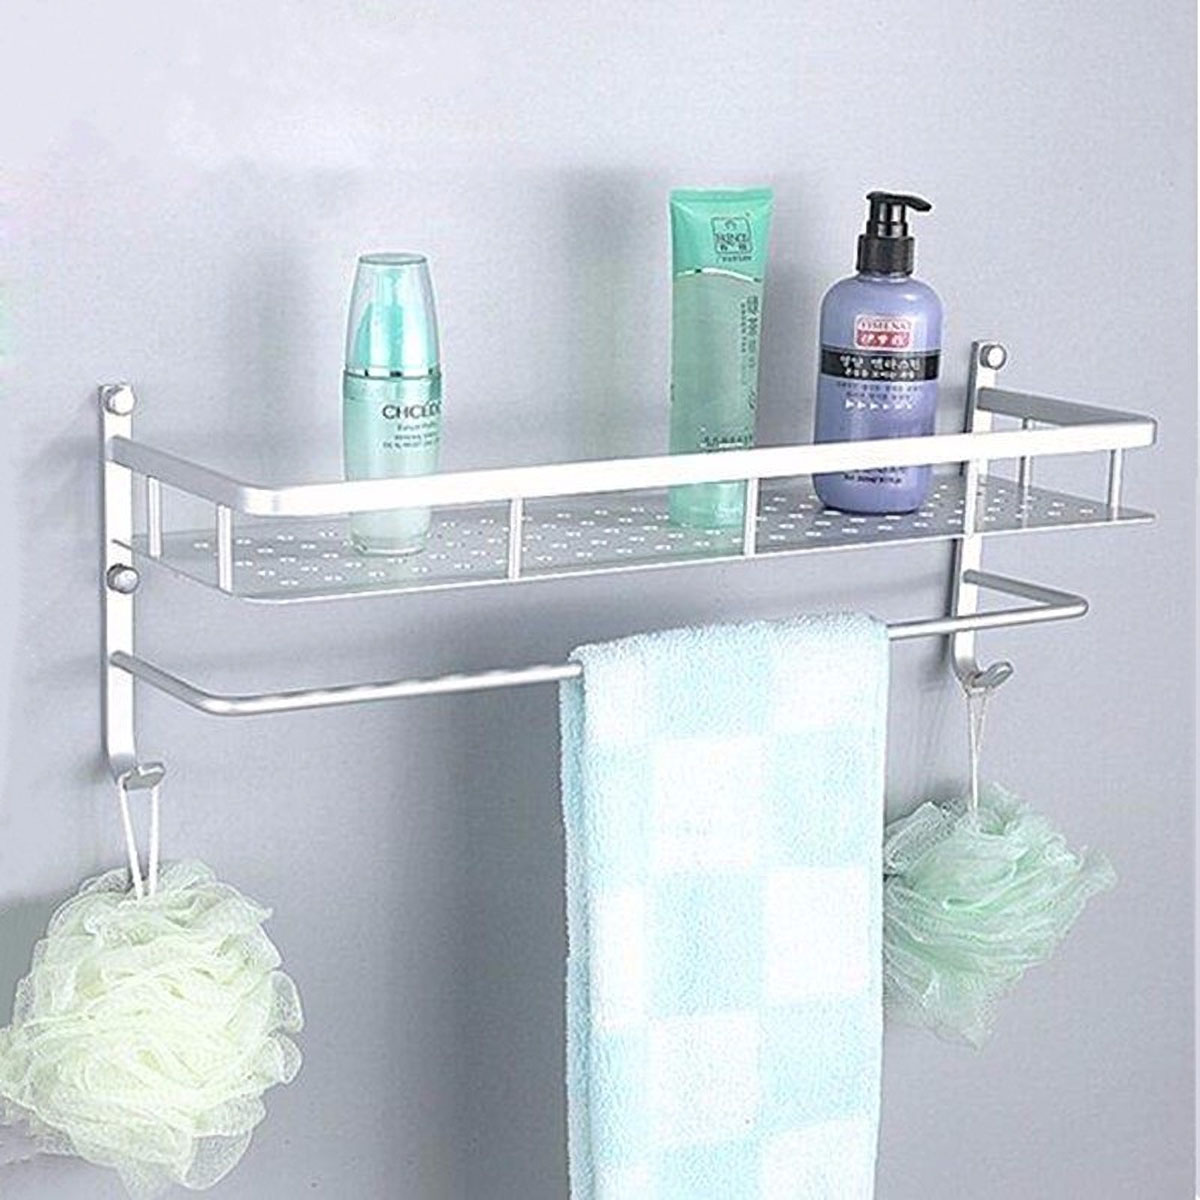 12-Layers-Bathroom-Wall-Mounted-Rack-Alumimum-Storage-Shelf-Towel-Bar-Holder-Hanger-Organizer-Shelf-1771304-6